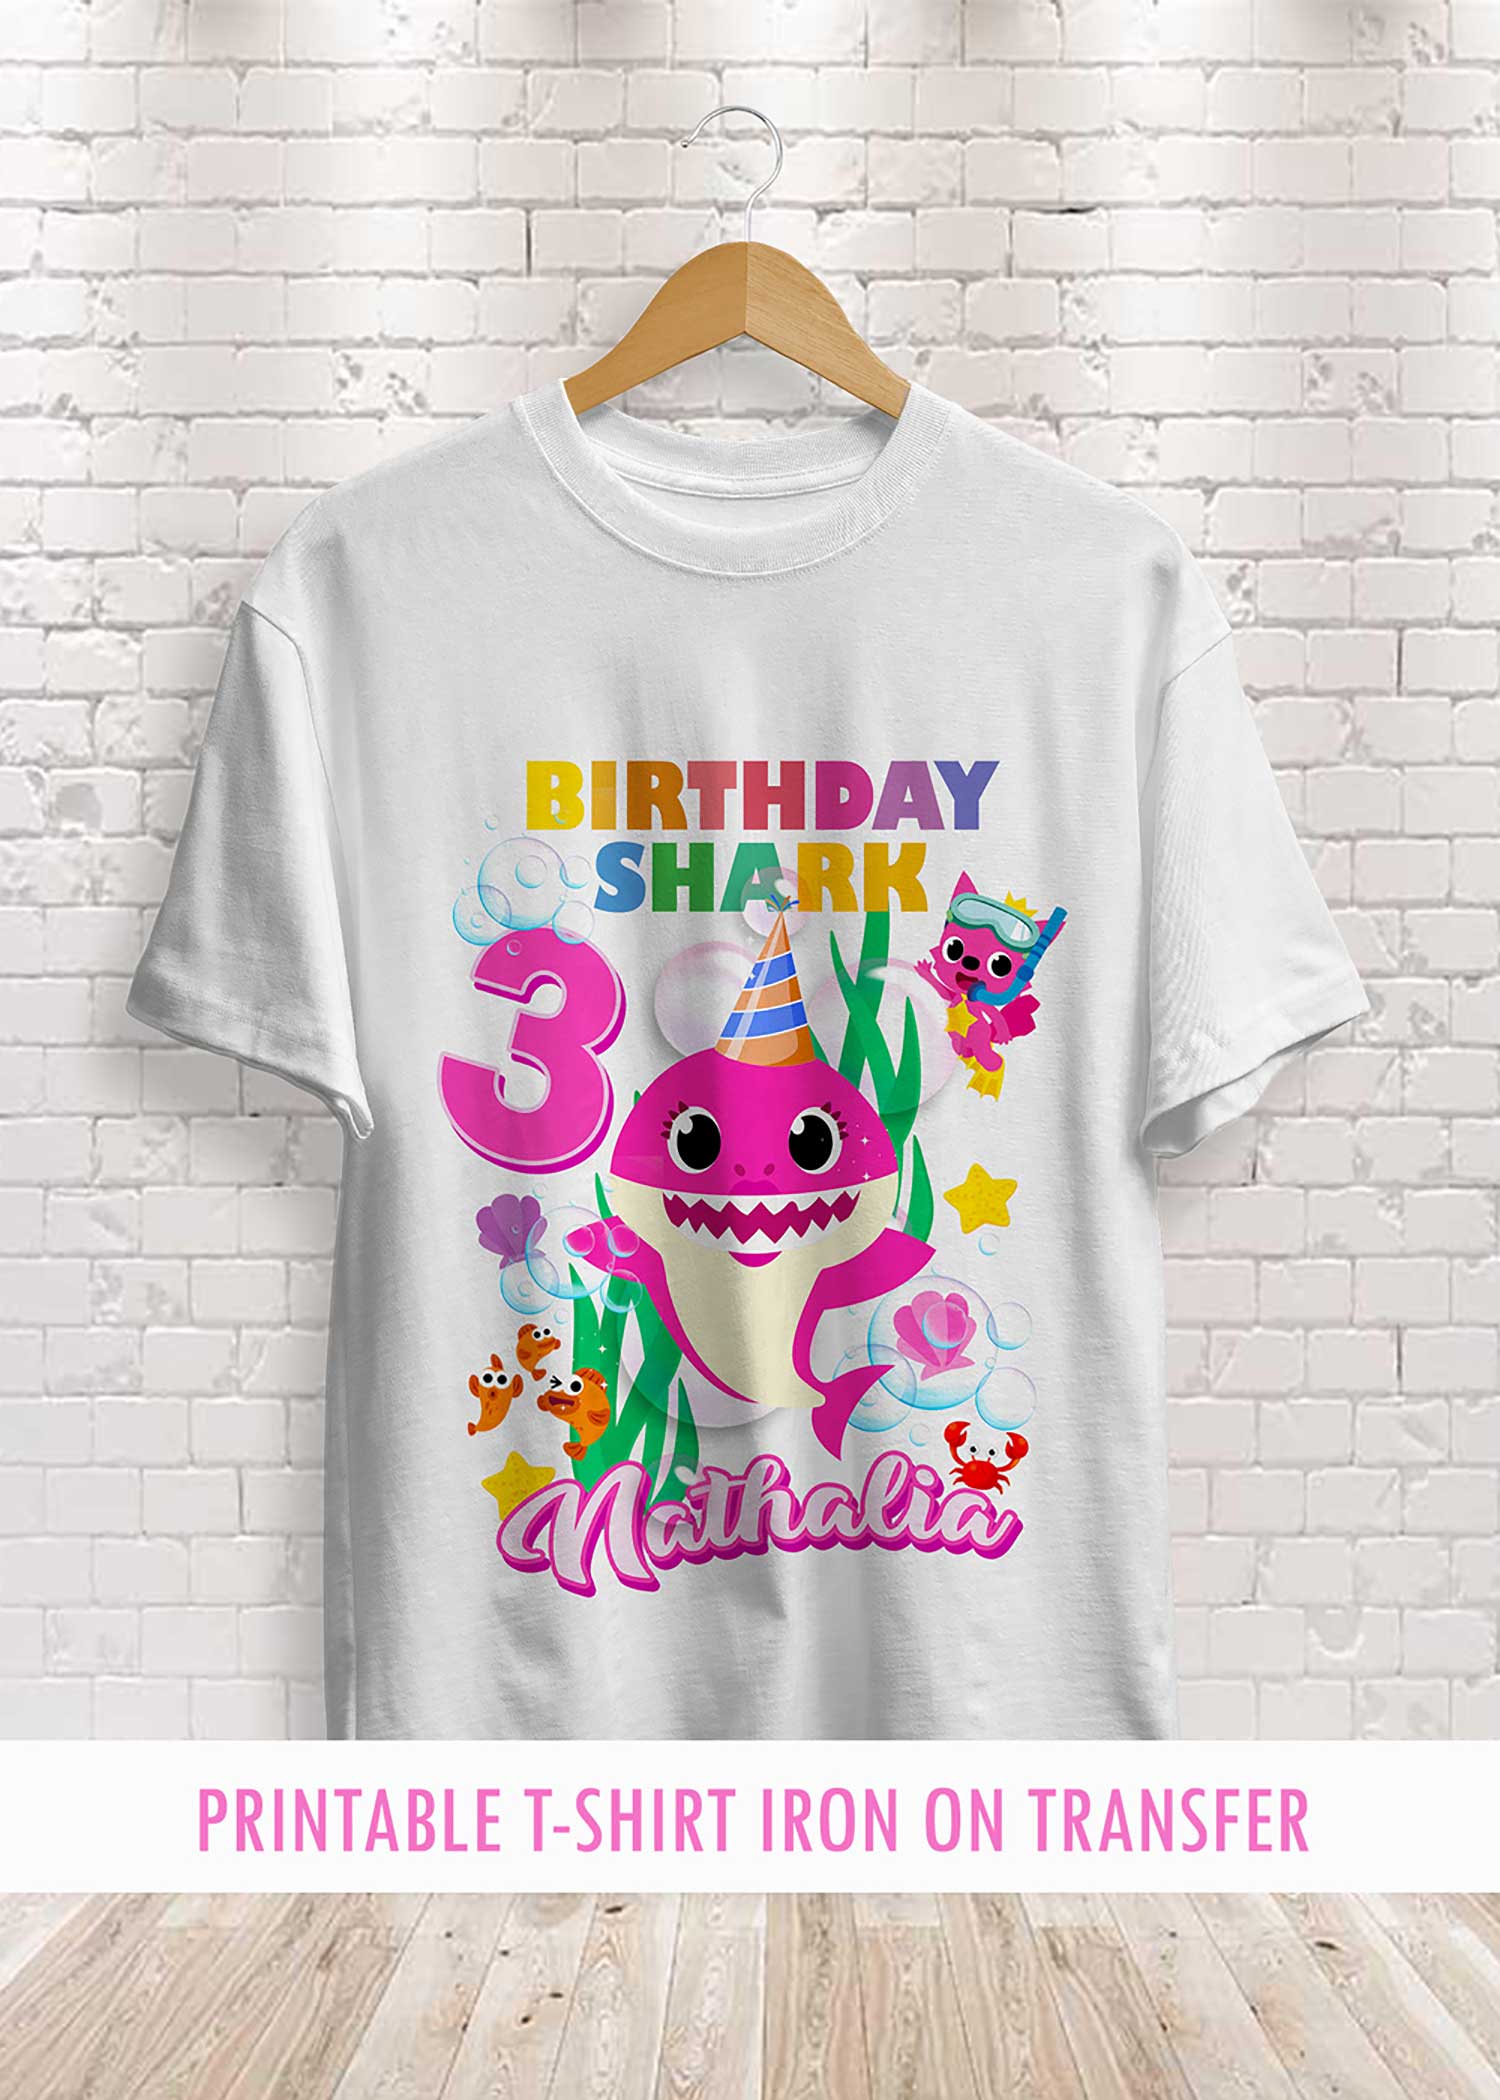 Editable T-shirts Design Roblox Girlkids Birthday Printable 